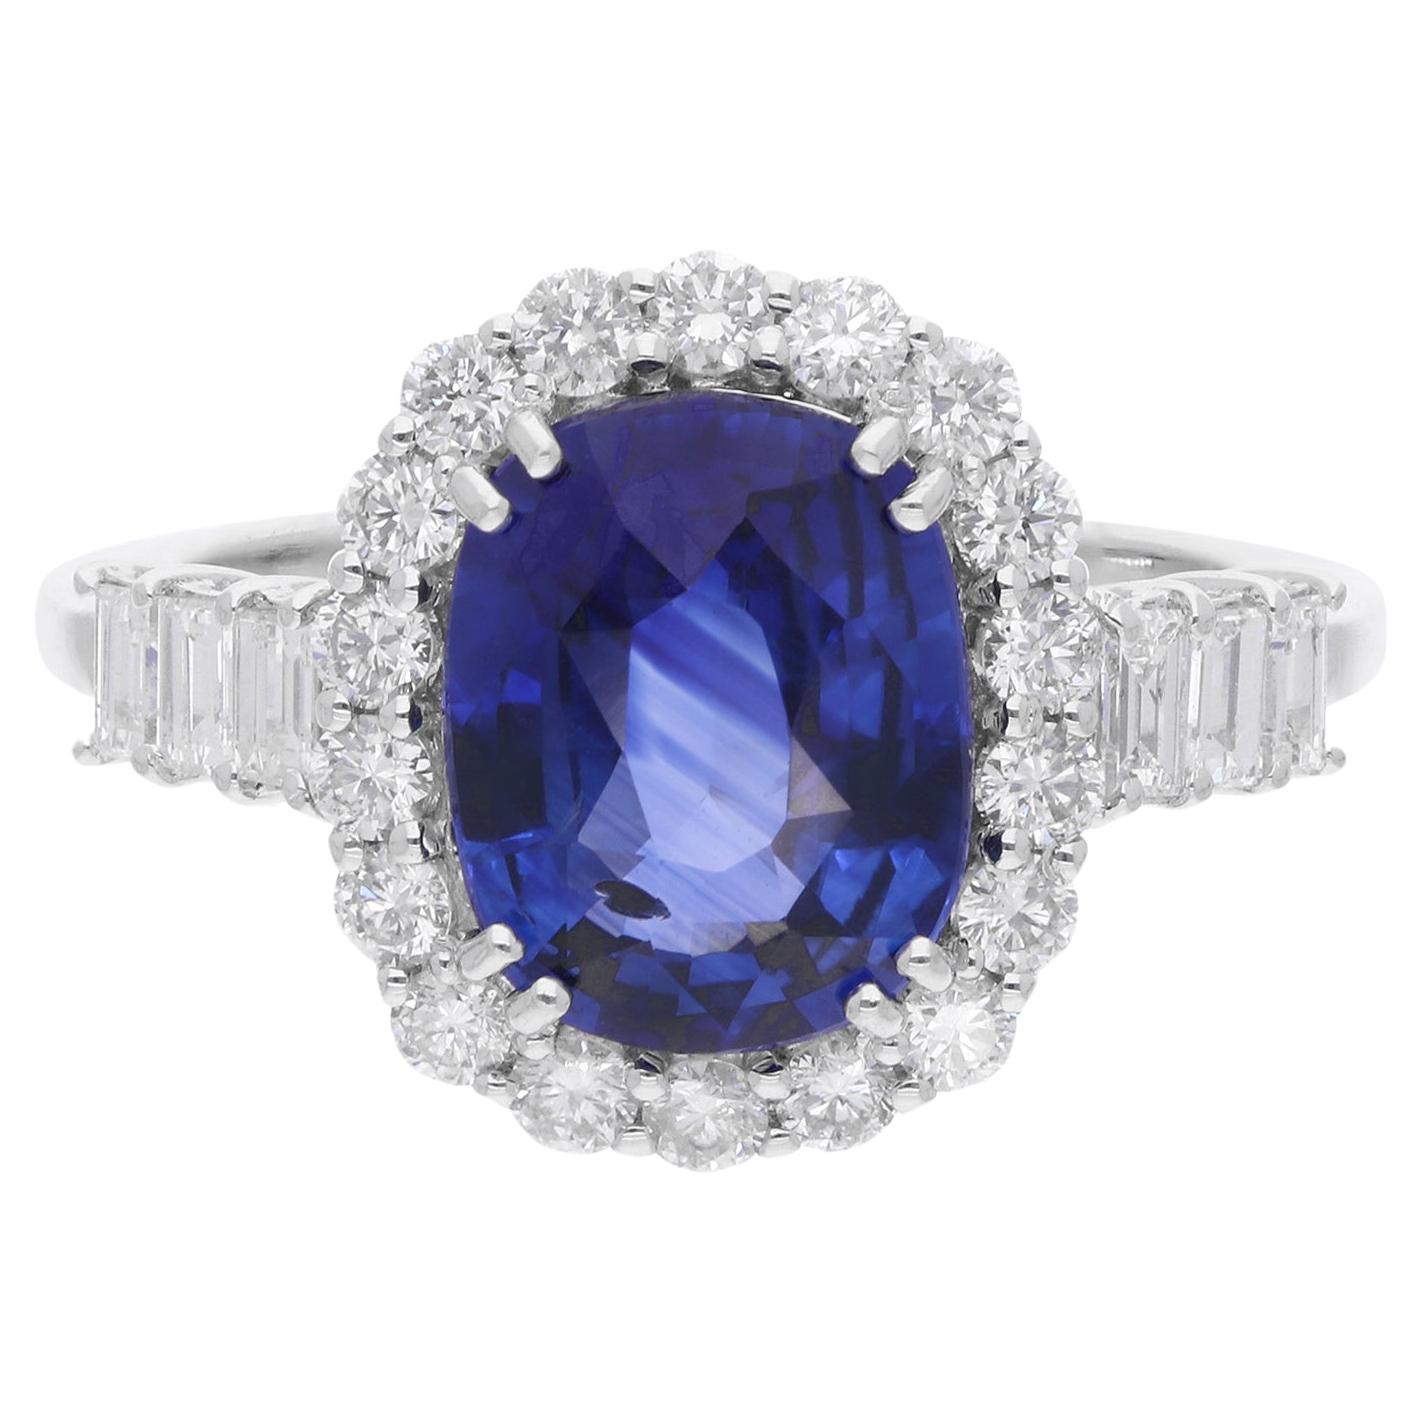 Blue Sapphire Cocktail Ring Diamond 18 Karat White Gold Handmade Fine Jewelry For Sale